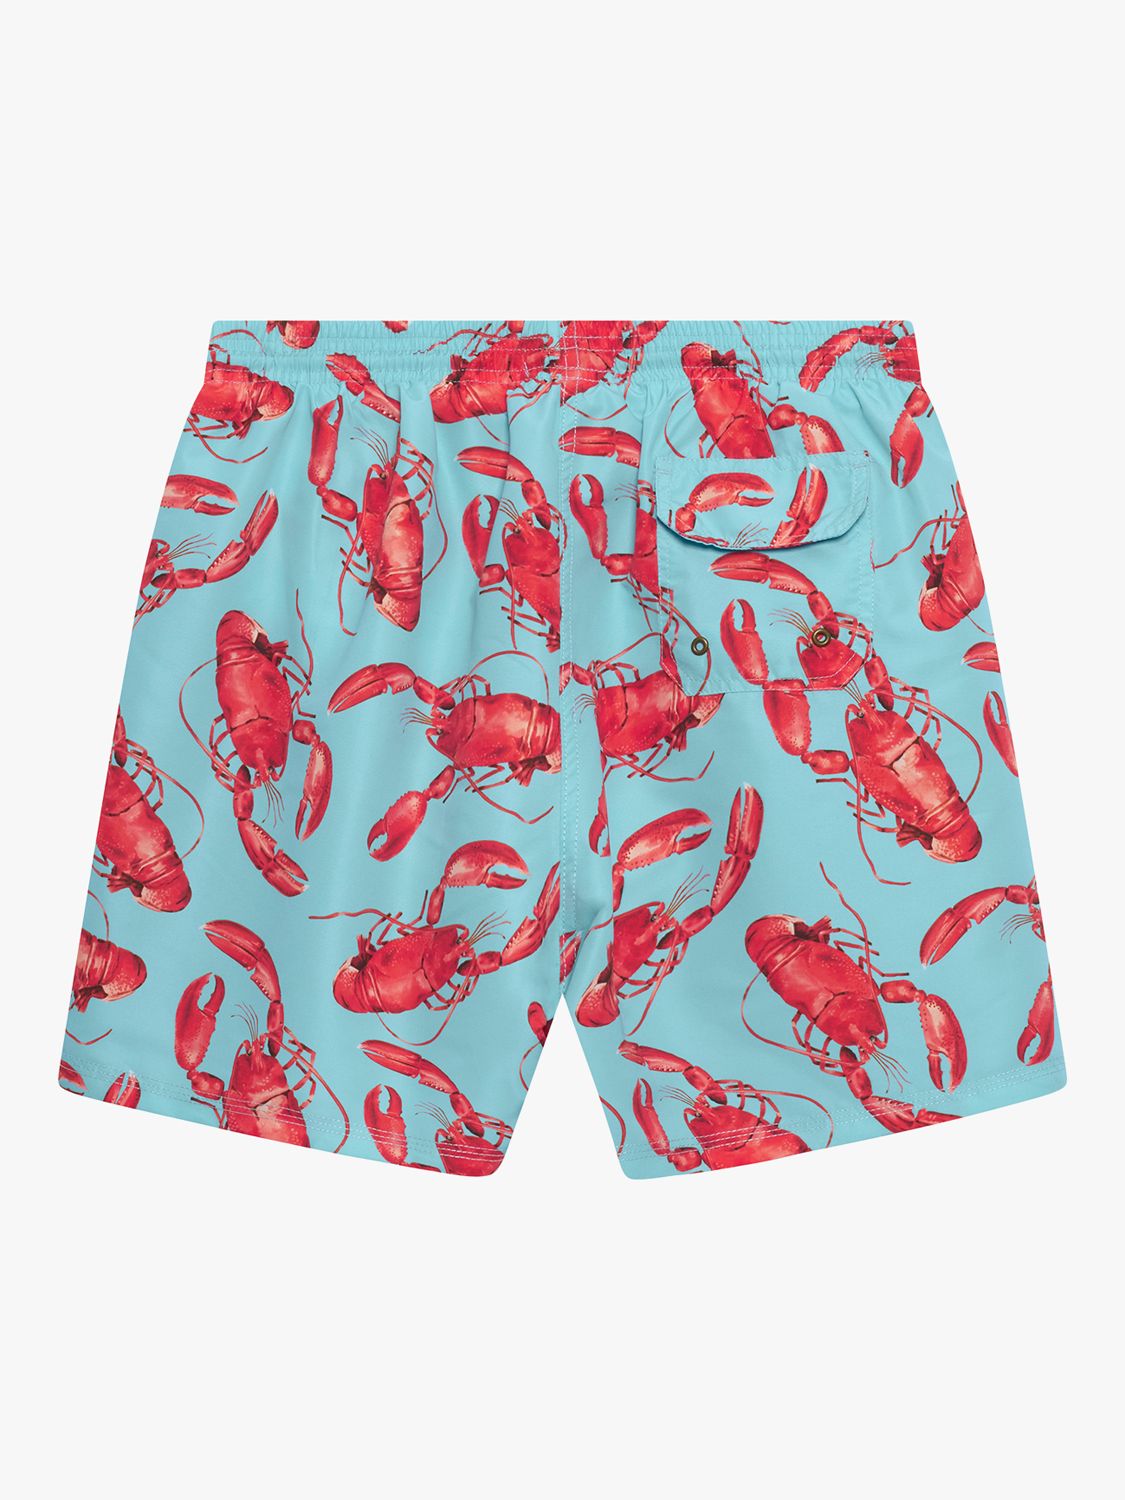 Trotters Lobster Print Swim Shorts, Aqua, S